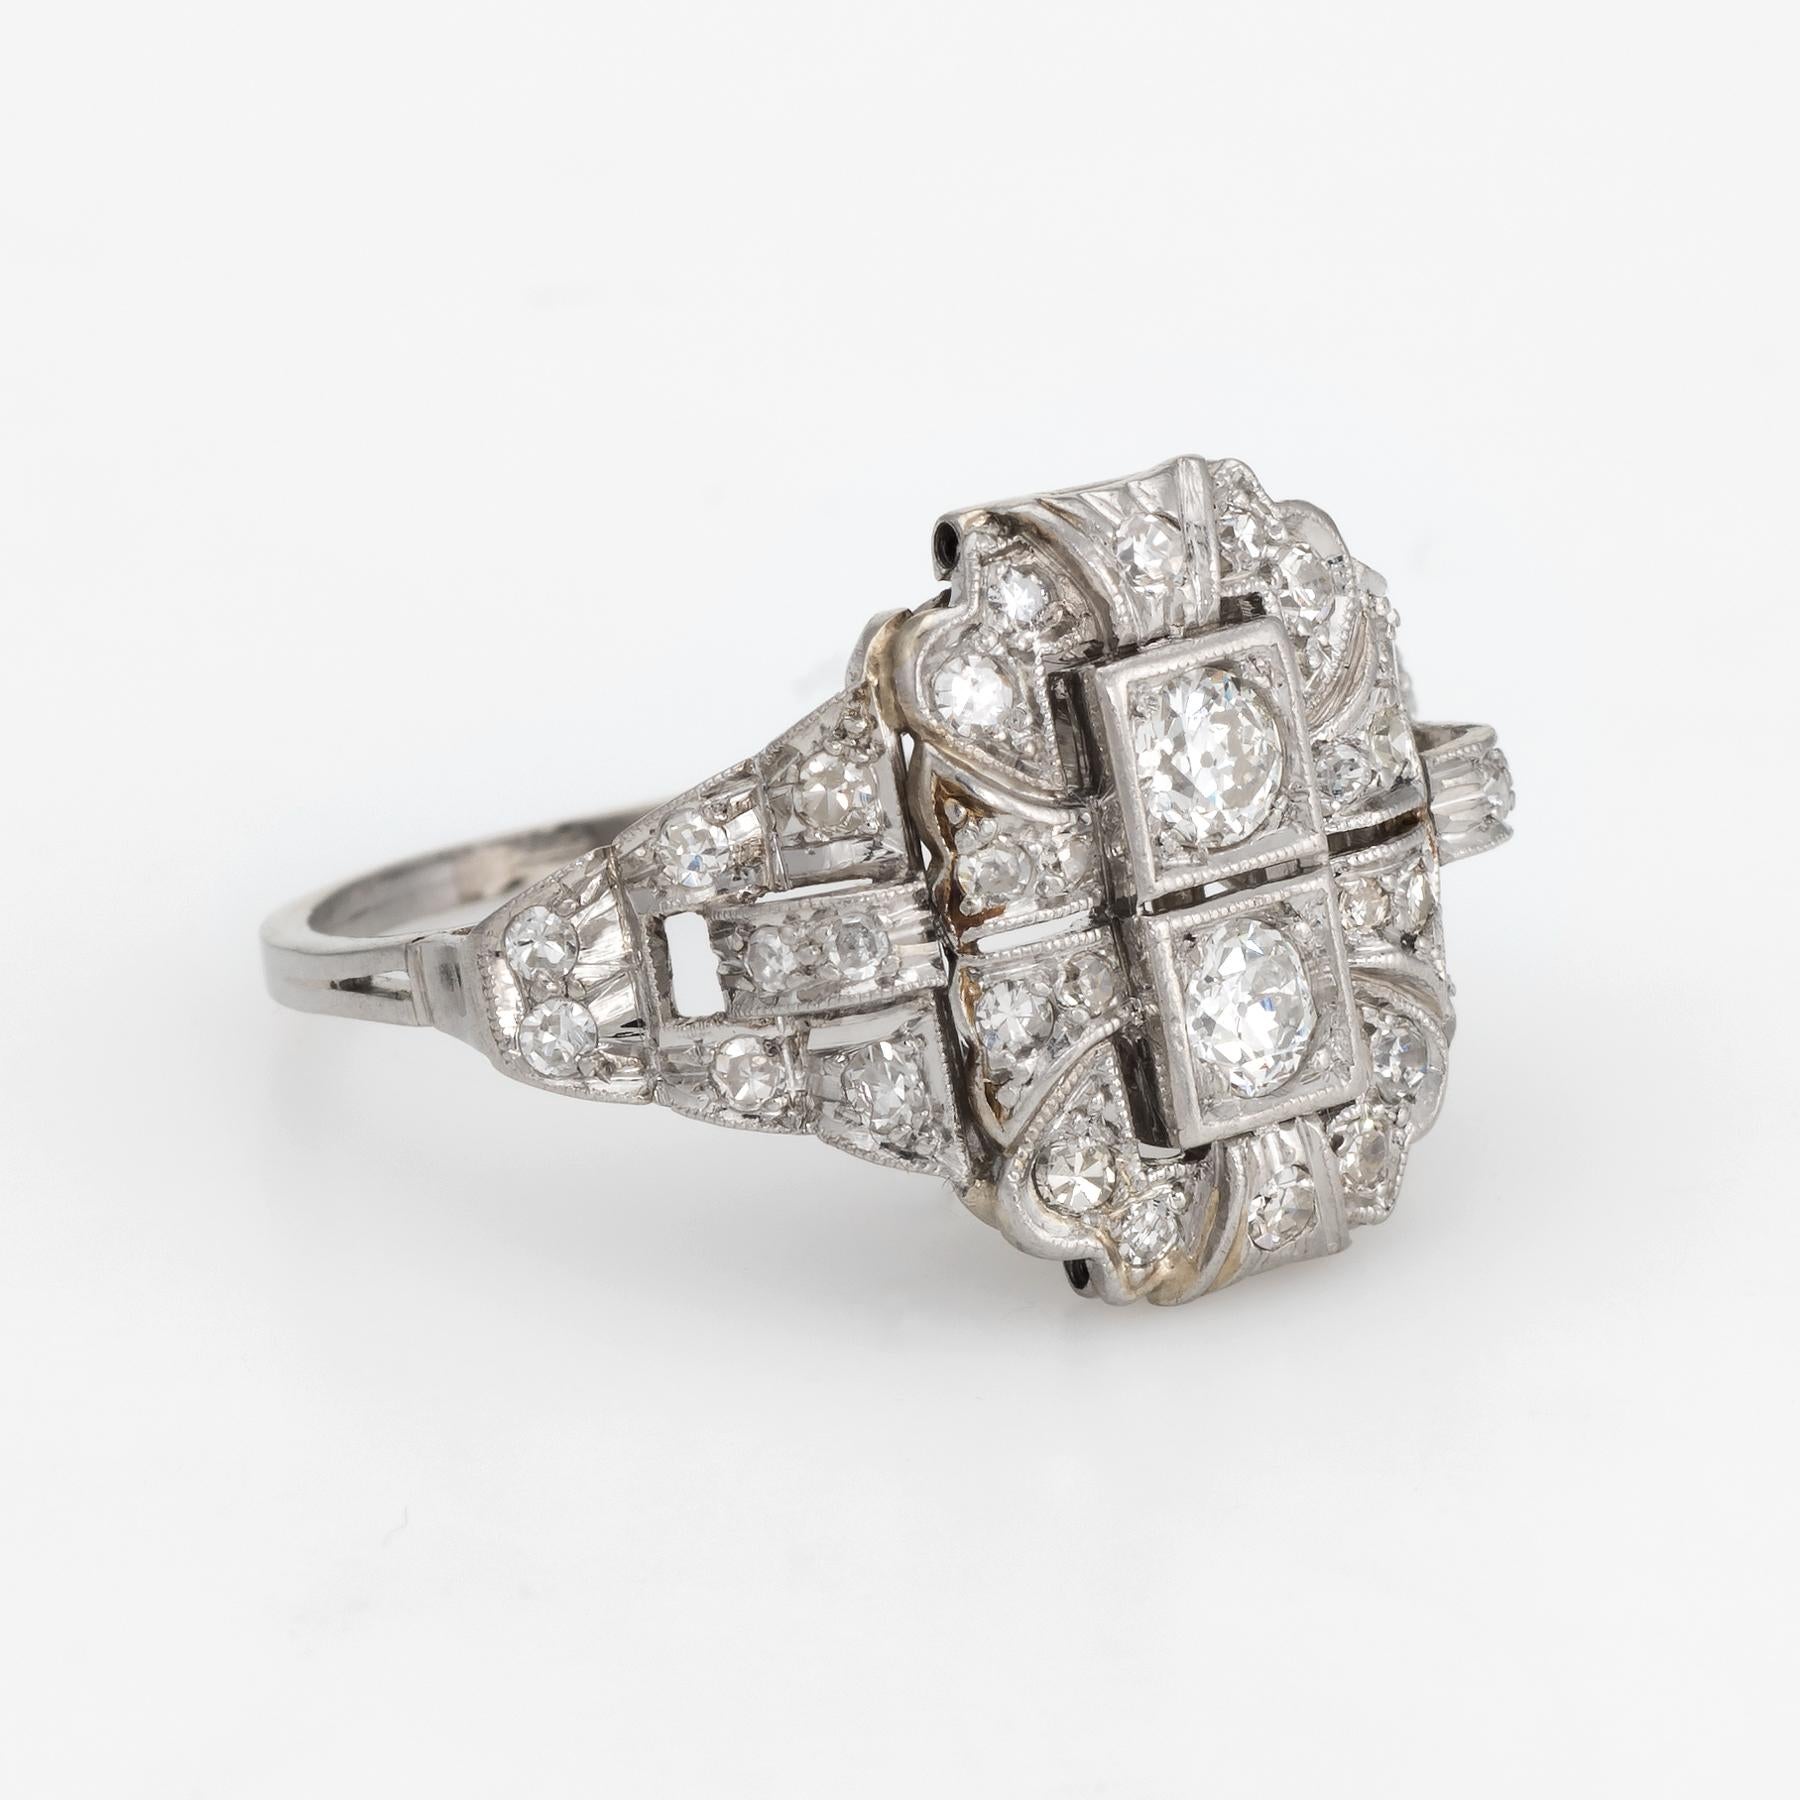 Art Deco Antique Deco Diamond Ring Platinum Cocktail Vintage Estate Jewelry Heirloom For Sale